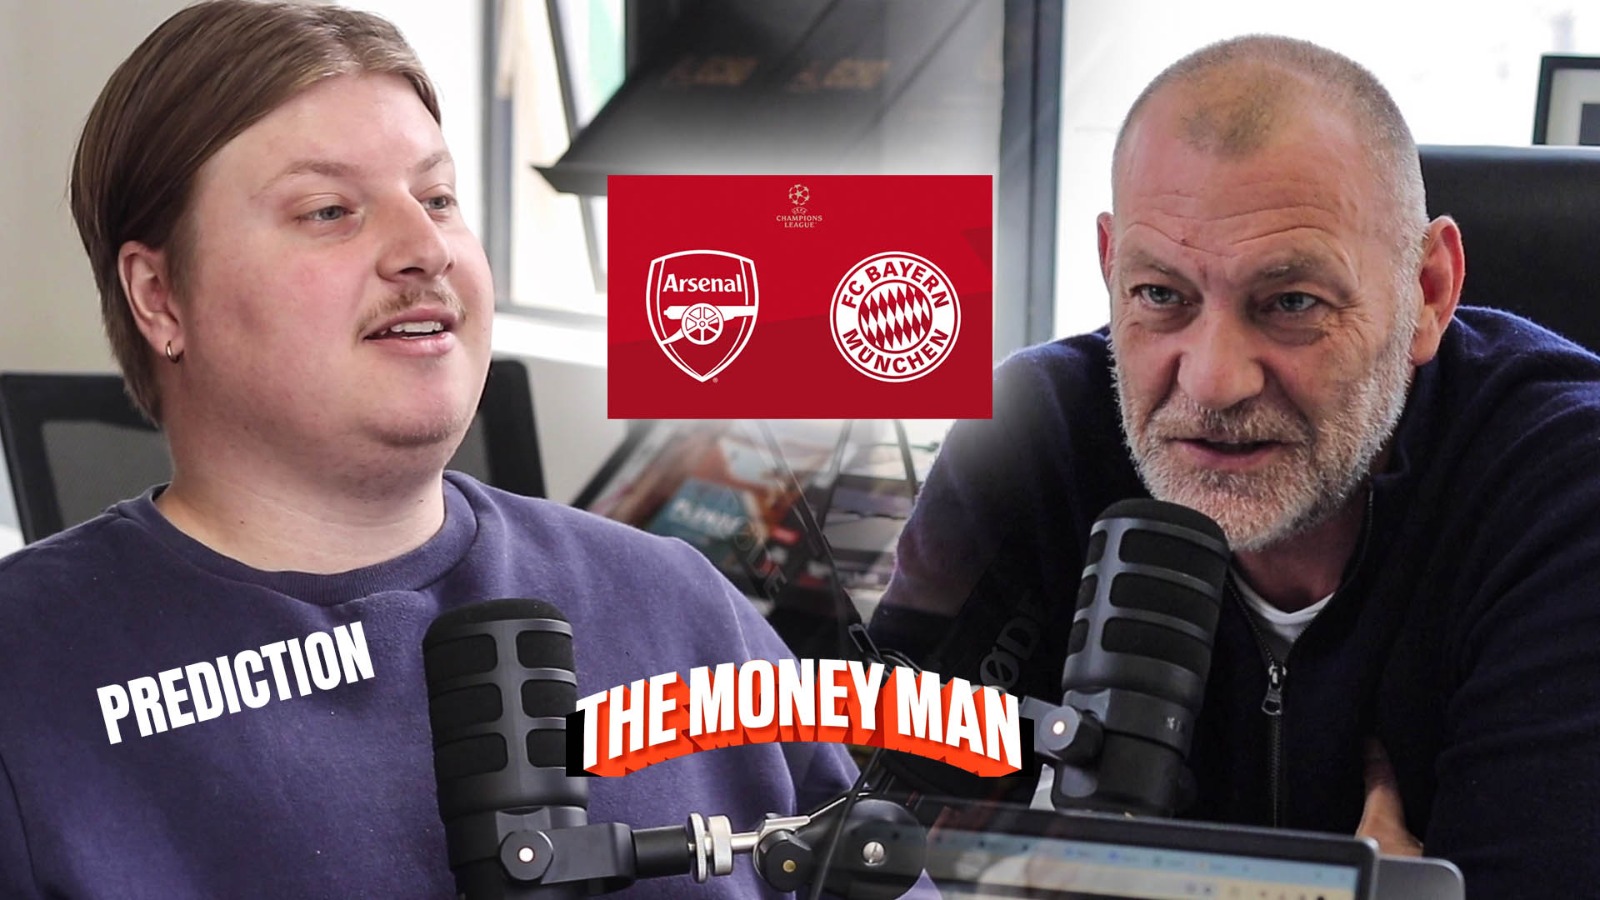 MoneyMan backs Arsenal to dominate Bayern at the Emirates